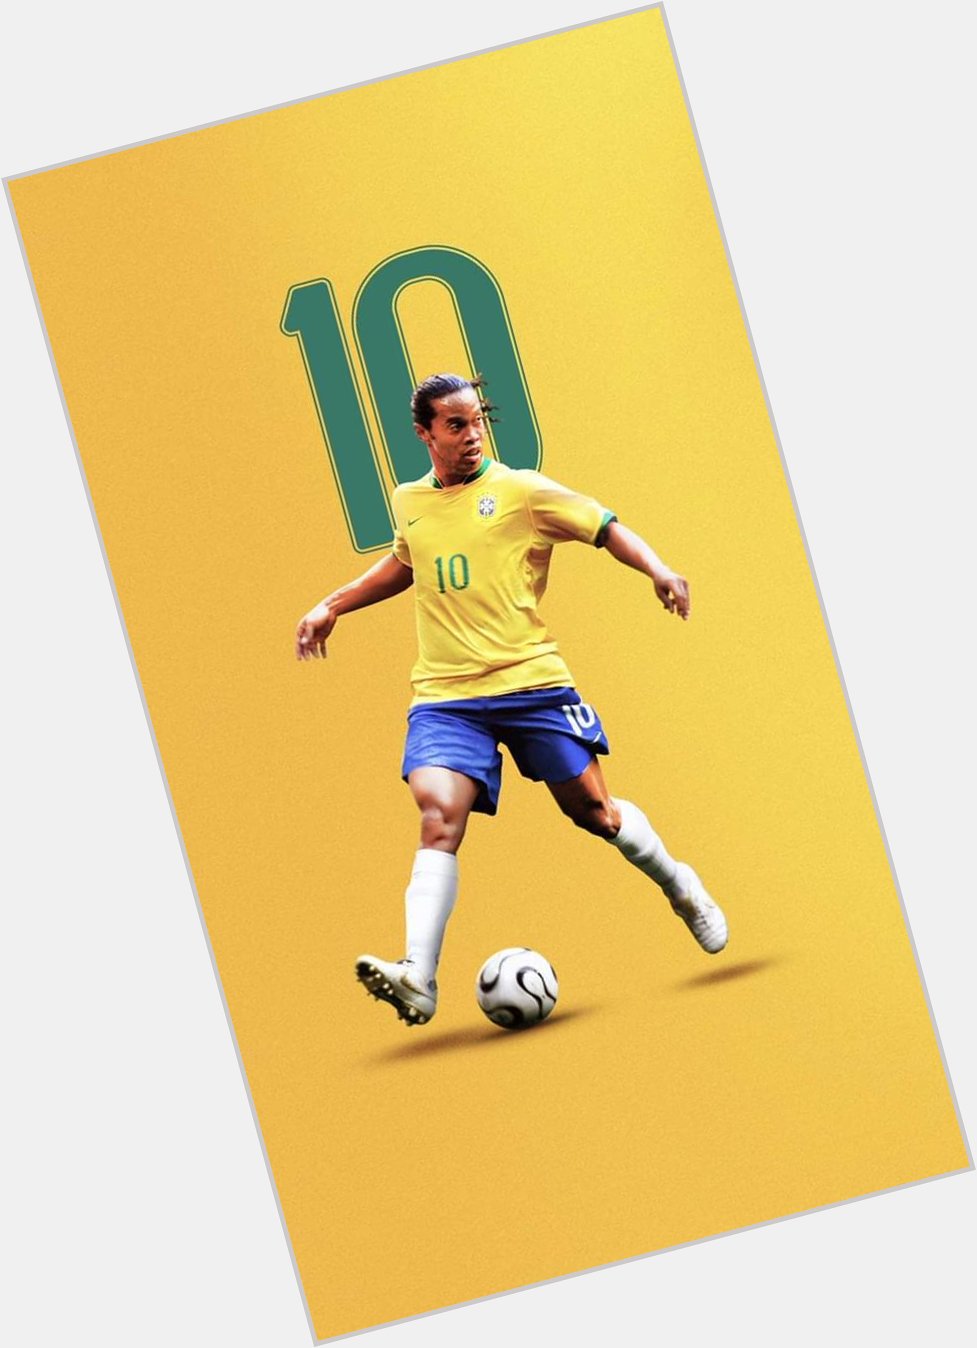 My favourite player Brazil
Happy Birthday Ronaldinho Gaúcho
10   